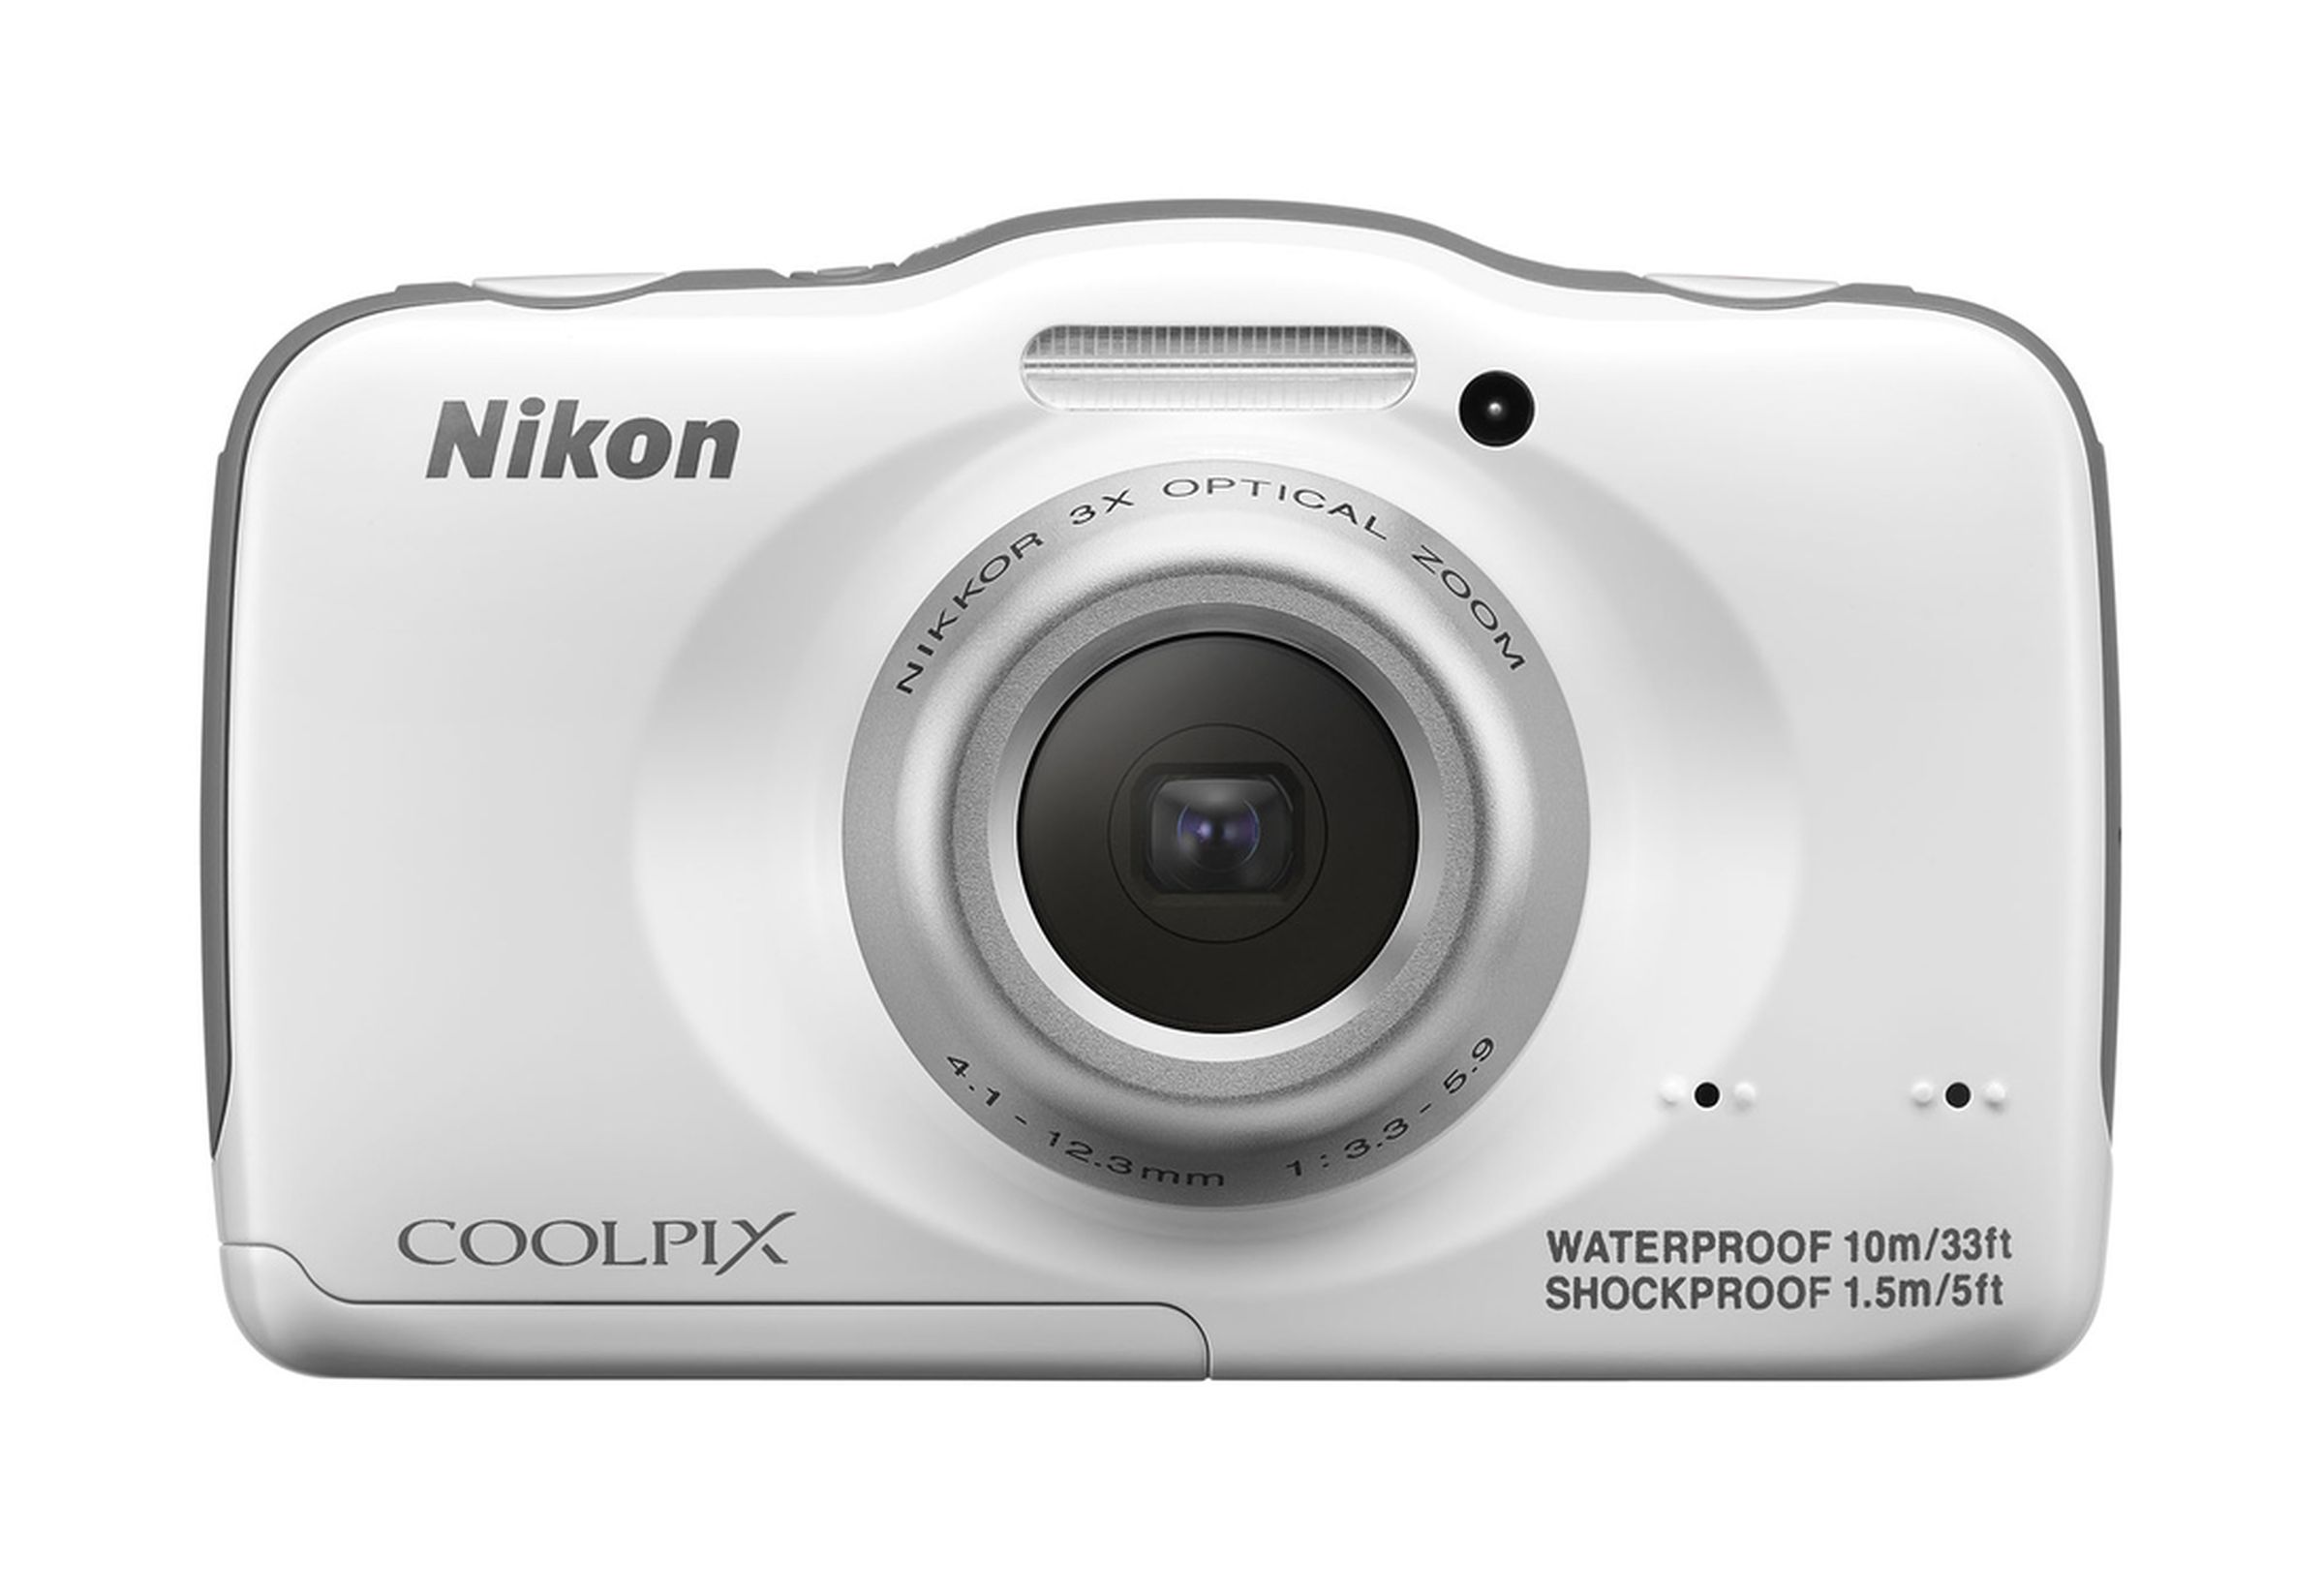 Nikon Coolpix press photos